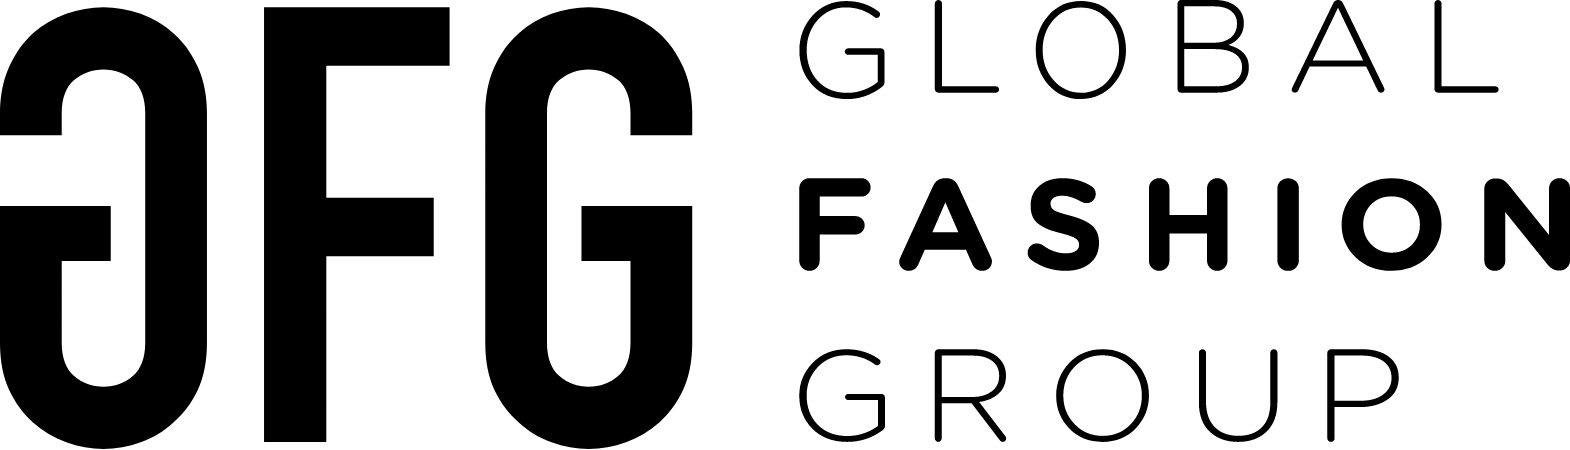 Global Fashion Group logo large (transparent PNG)